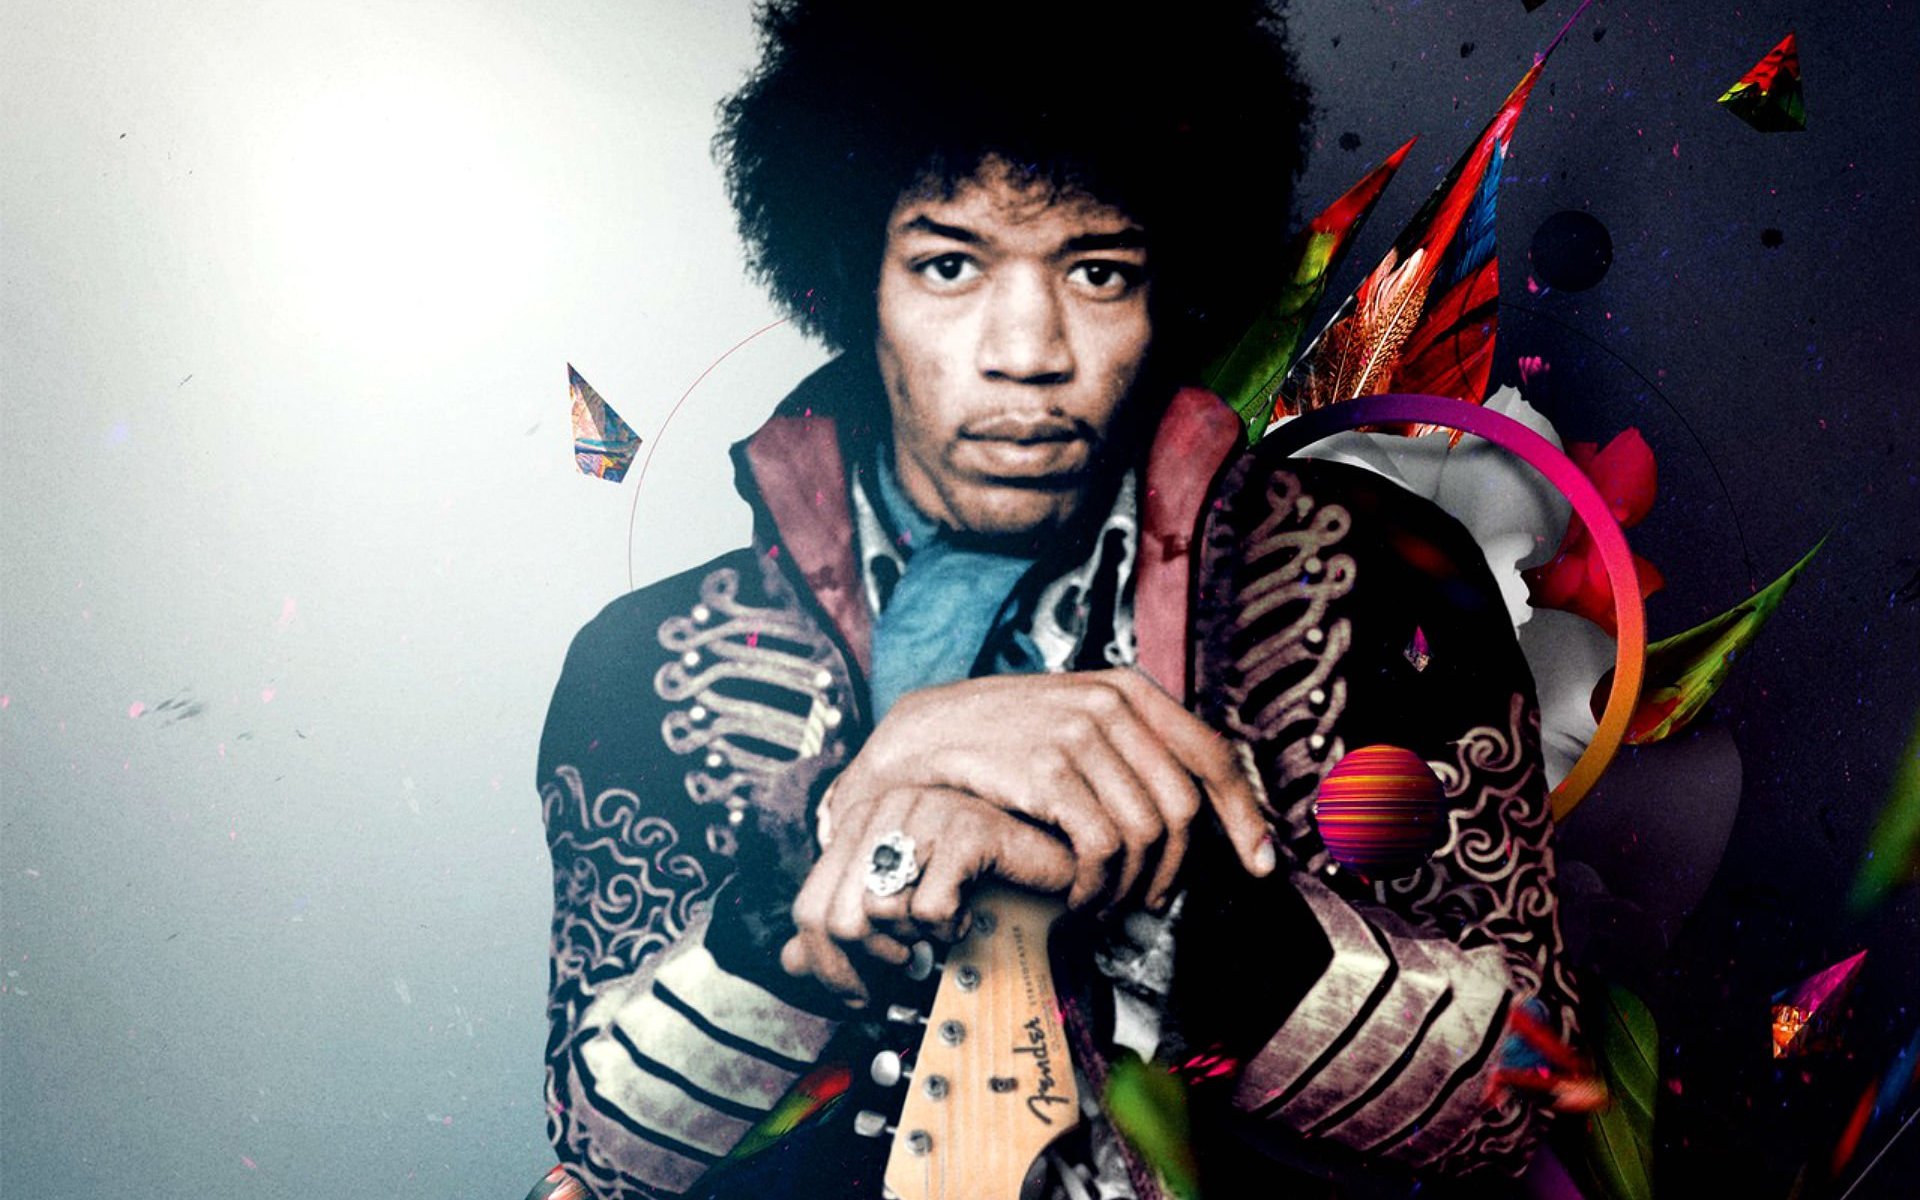 Jimi Hendrix Live WallpaperAmazoncomAppstore for Android